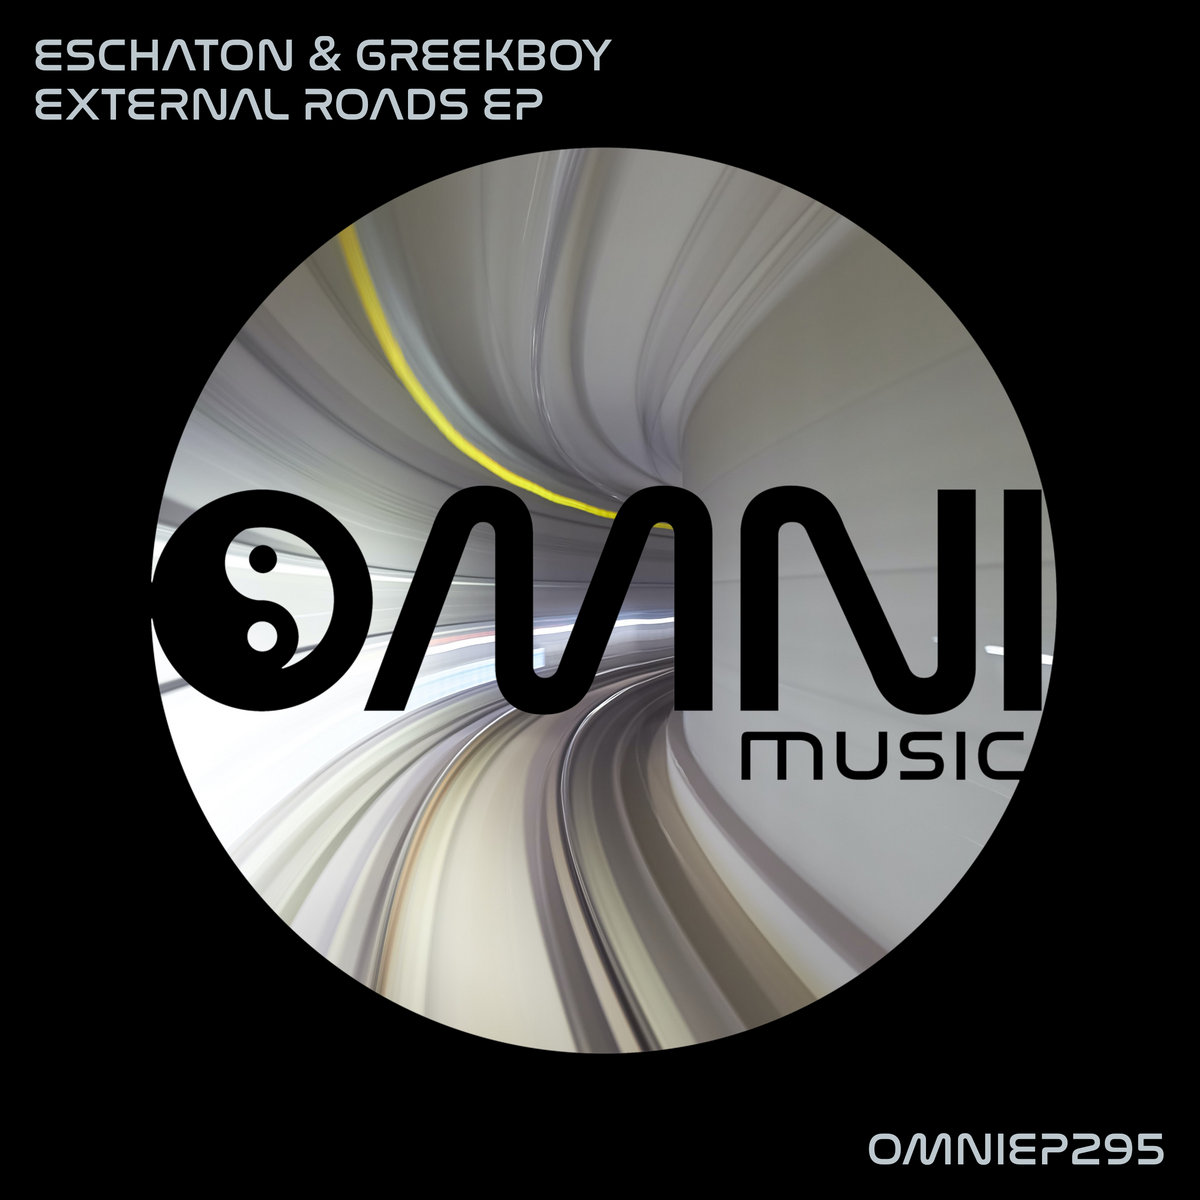 External Roads EP | Eschaton & Greekboy | Omni Music